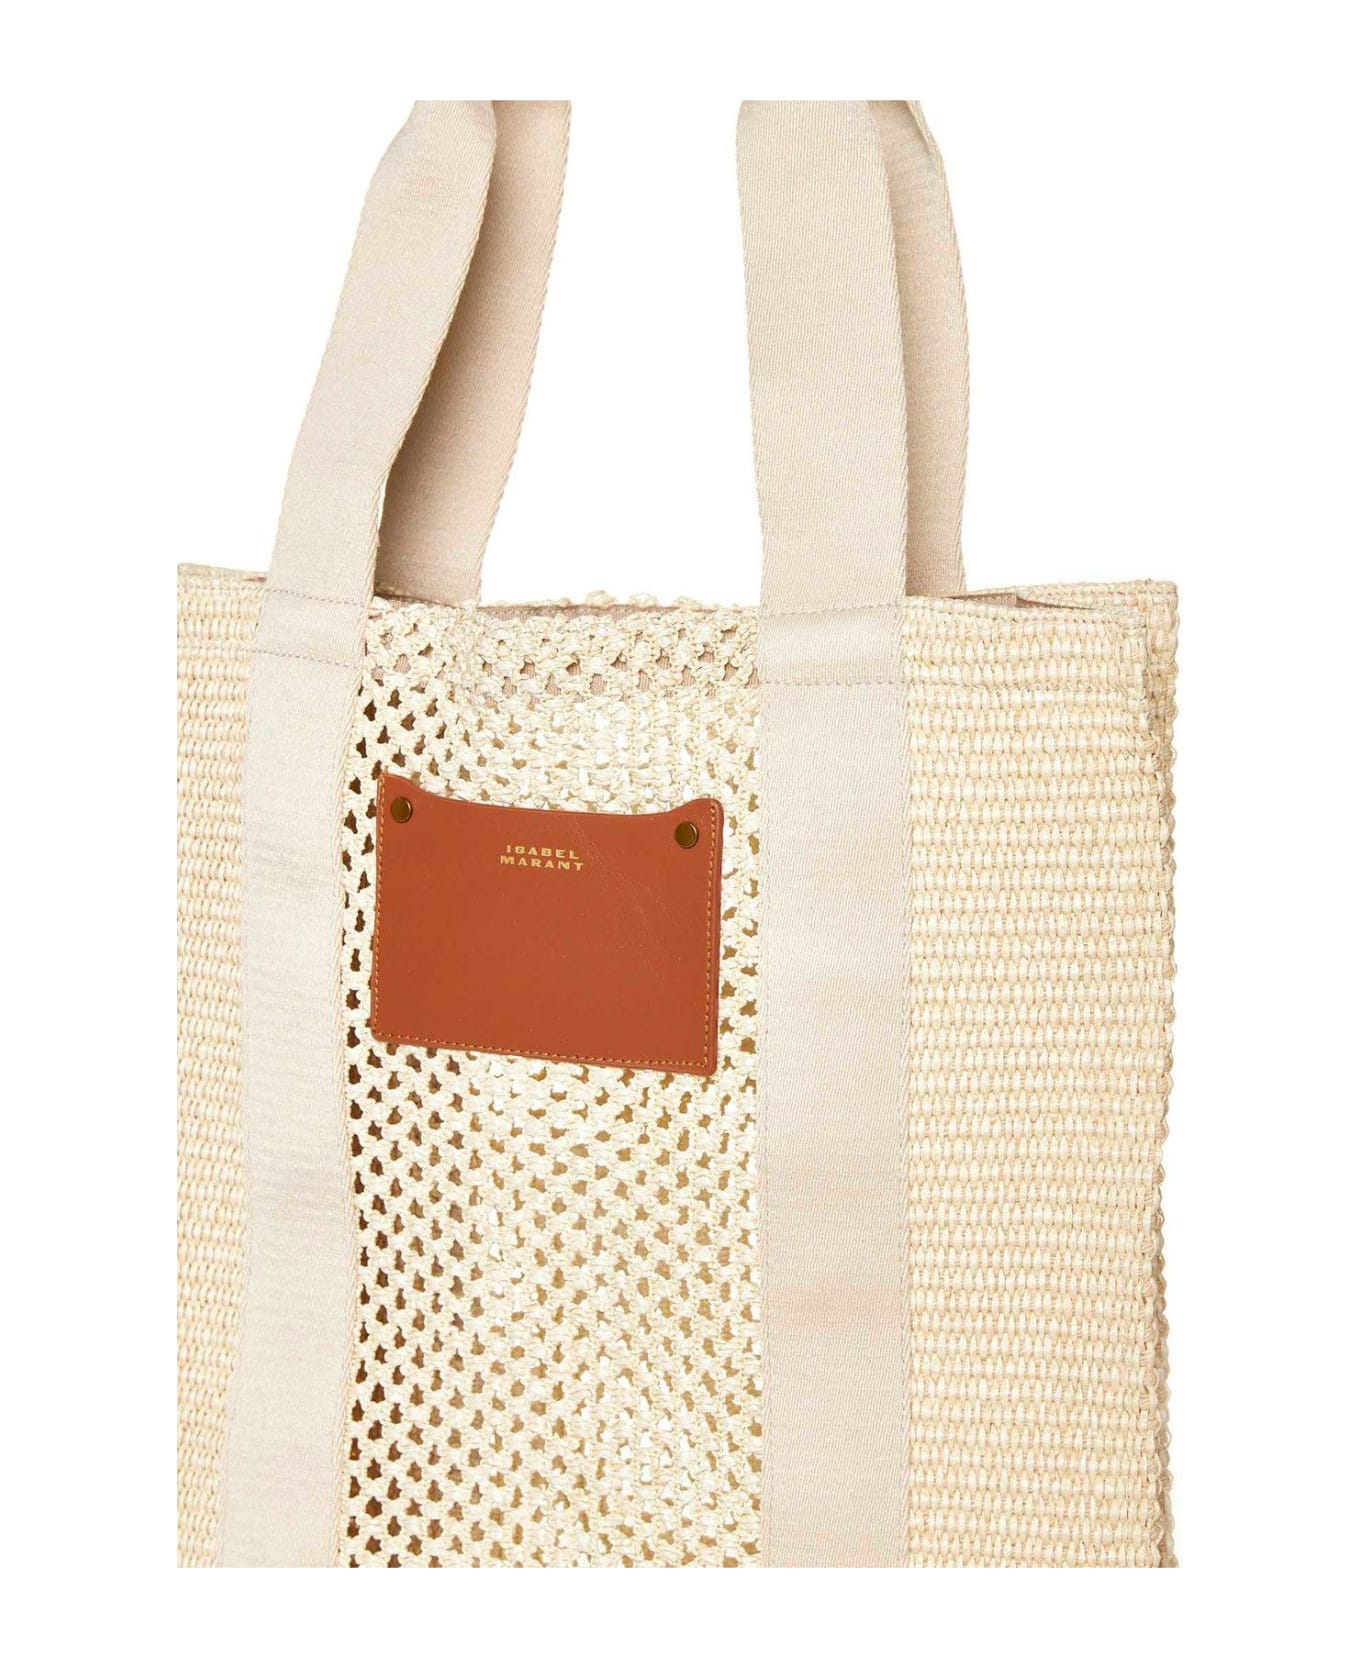 Isabel Marant Striped Woven Top Handle Bag - Beige/beige トートバッグ